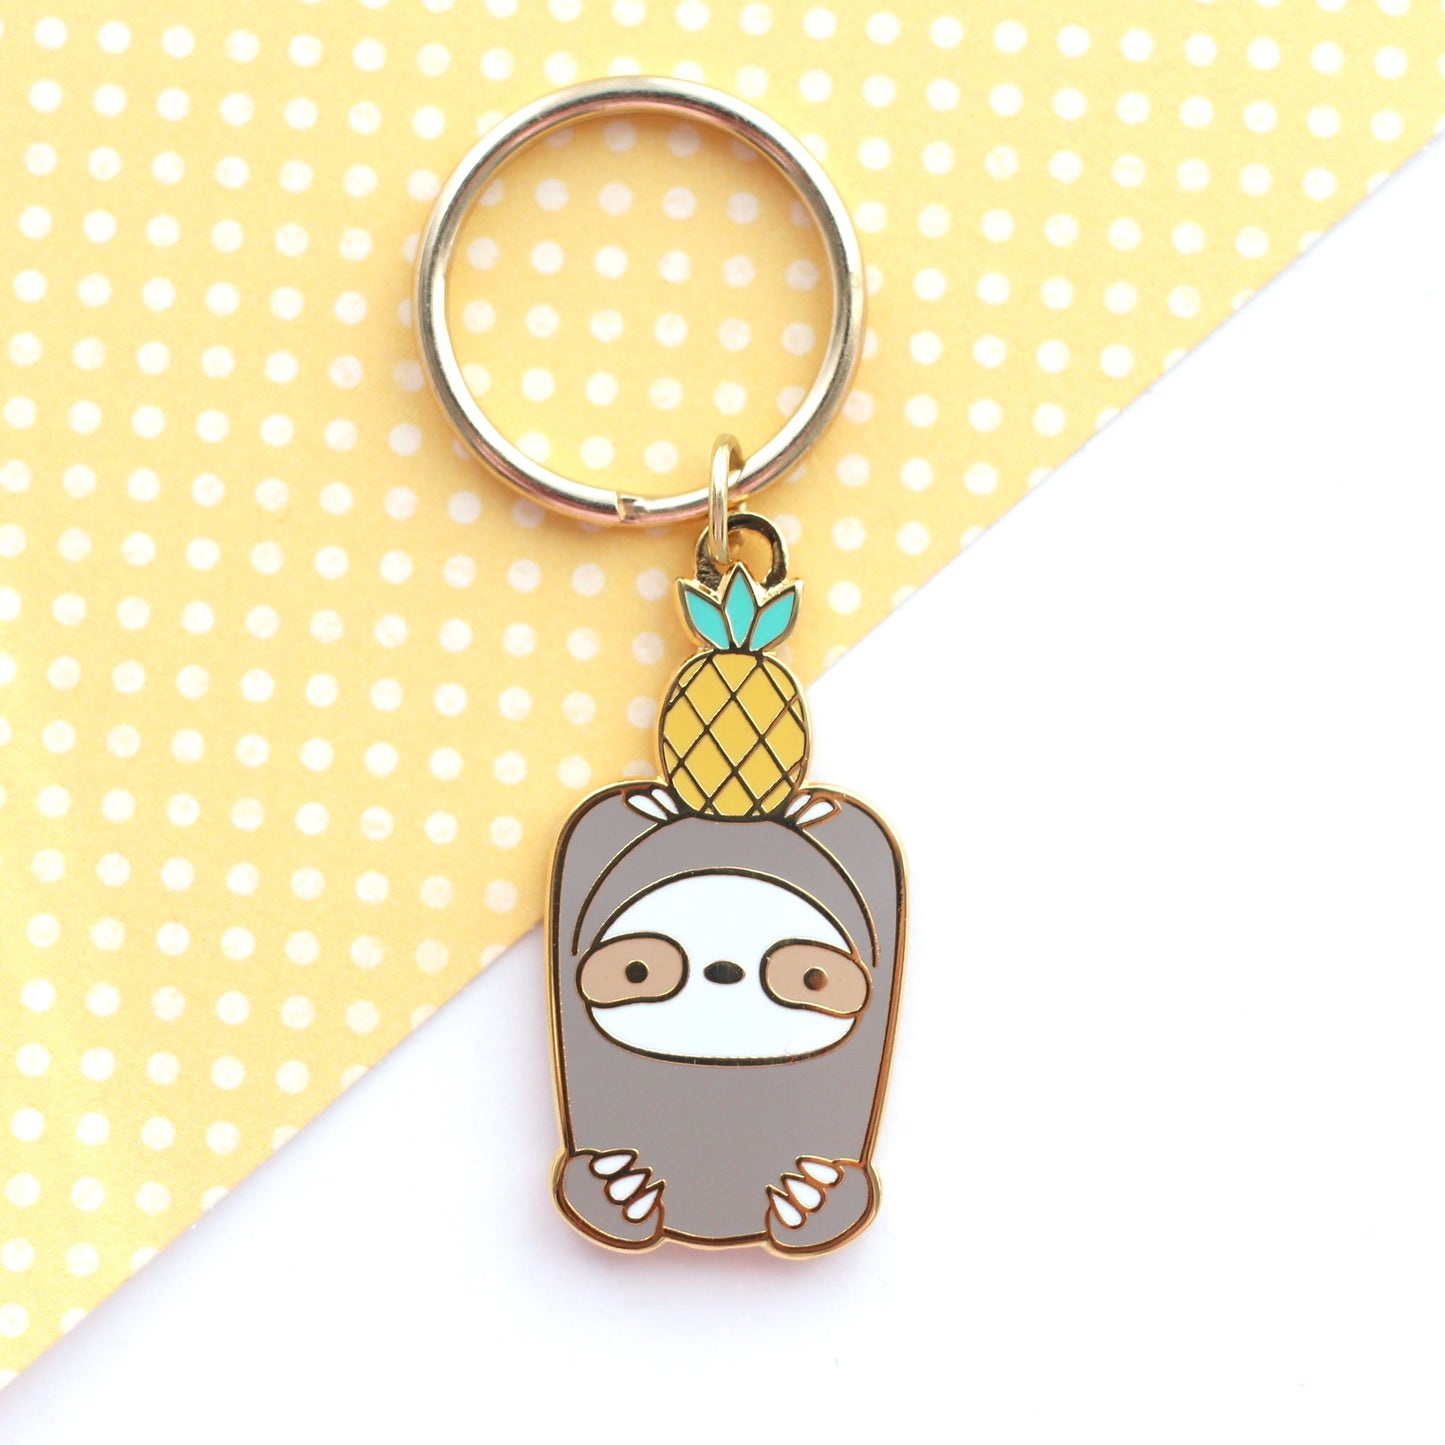 Pineapple Sloth Enamel Keychain - Cute Animal Keychain